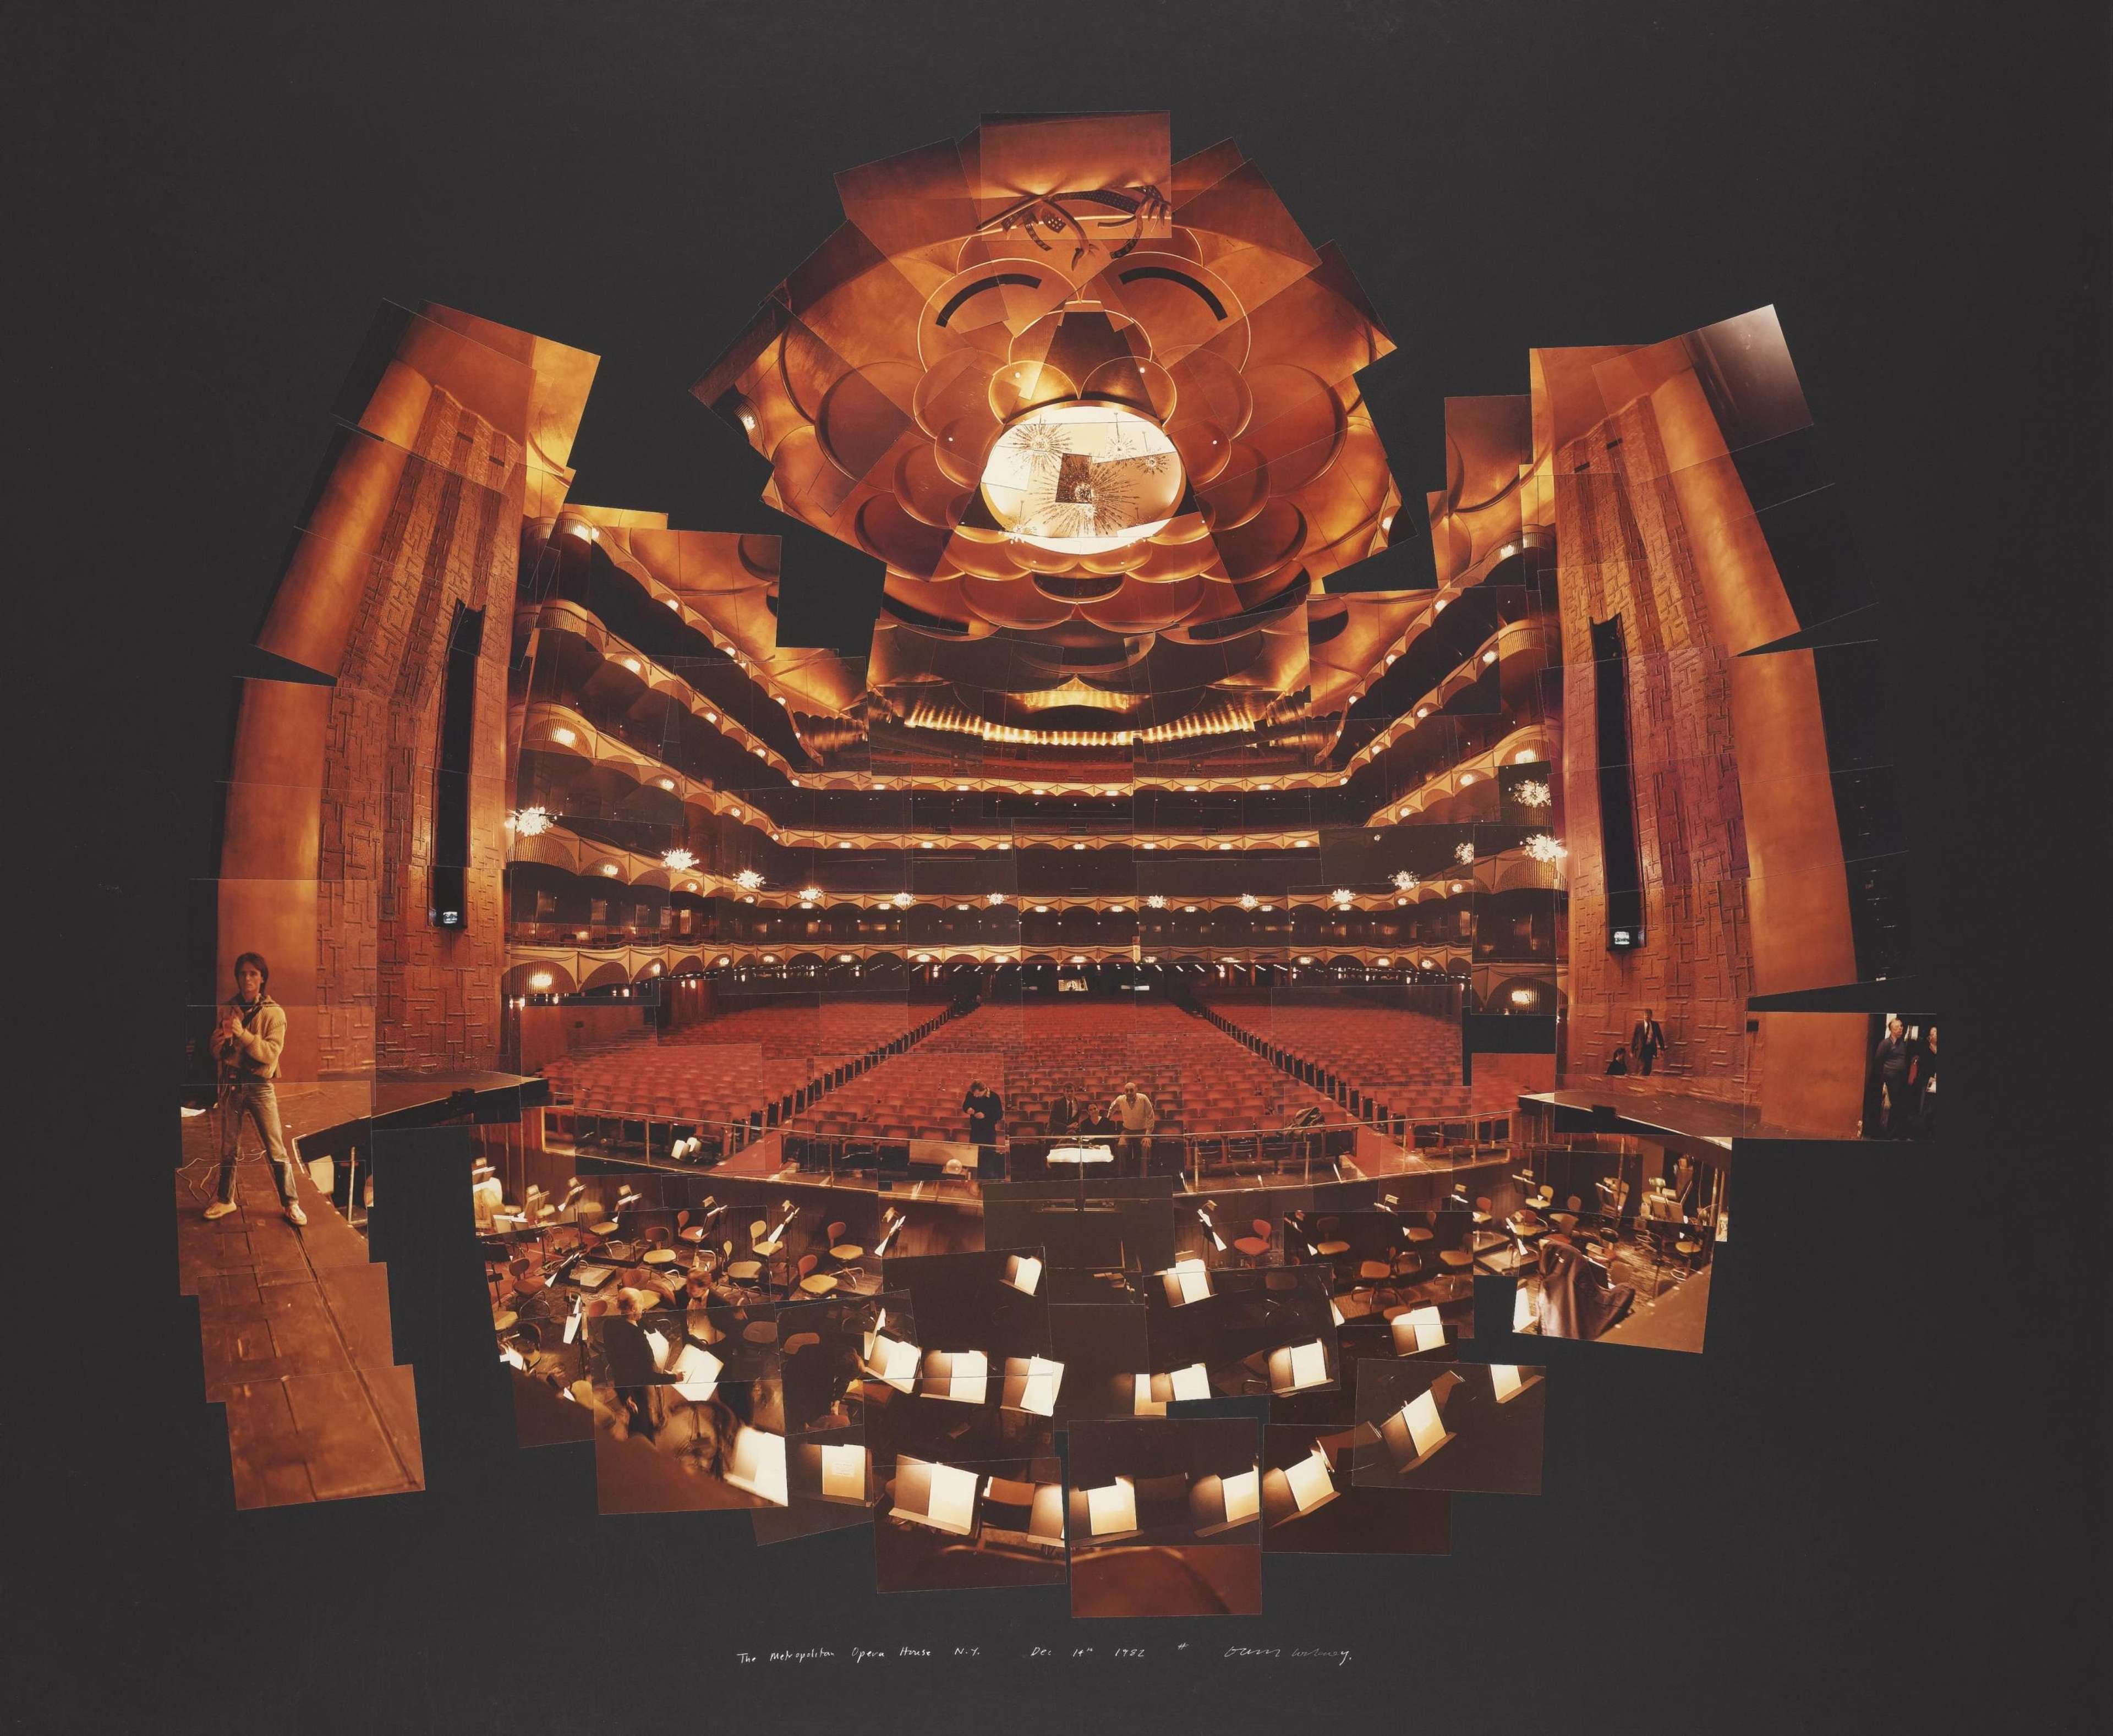 David Hockney's The Metropolitan Opera House. A photo collage of an interior of the Metropolitan Opera House